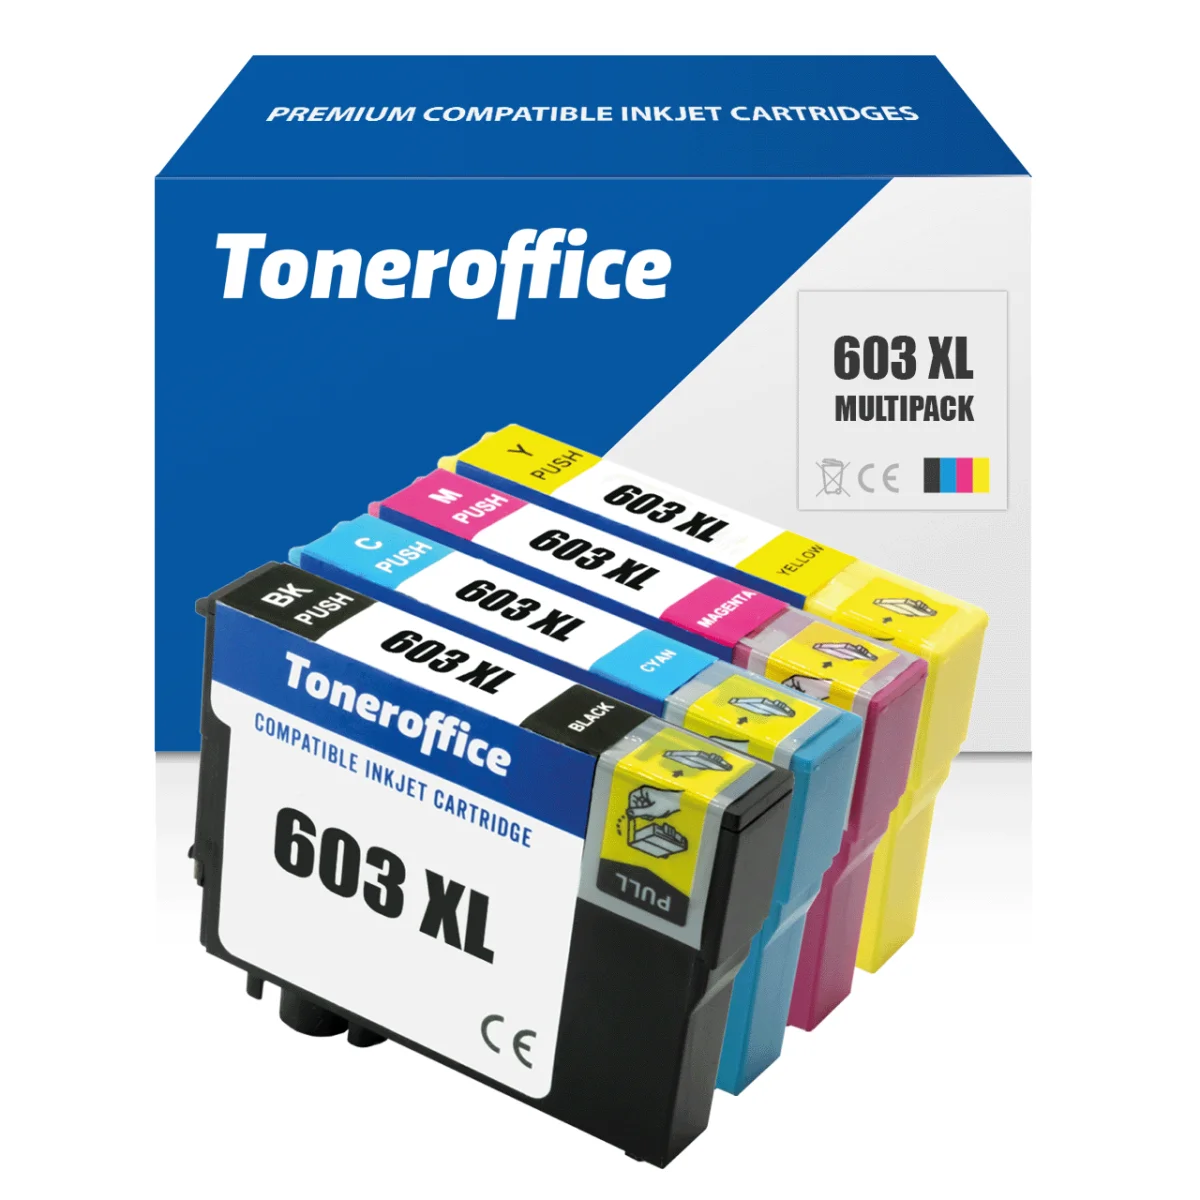 Kompatibel Epson 603 XL Tintenpatronen bei uns im Online Shop | Toneroffice.de